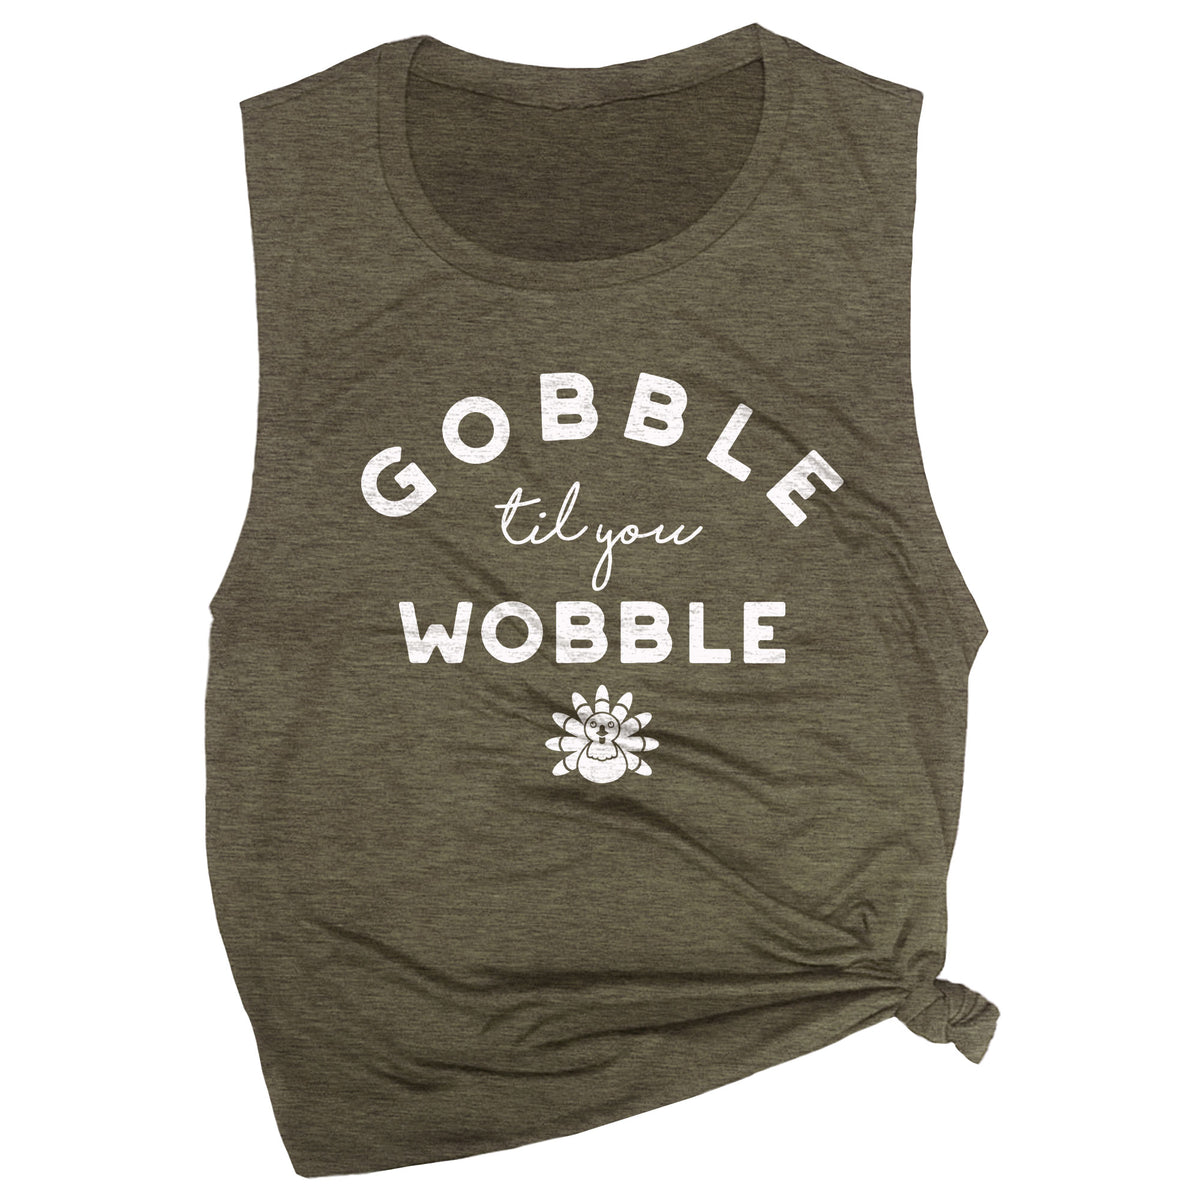 Gobble Til You Wobble Muscle Tee